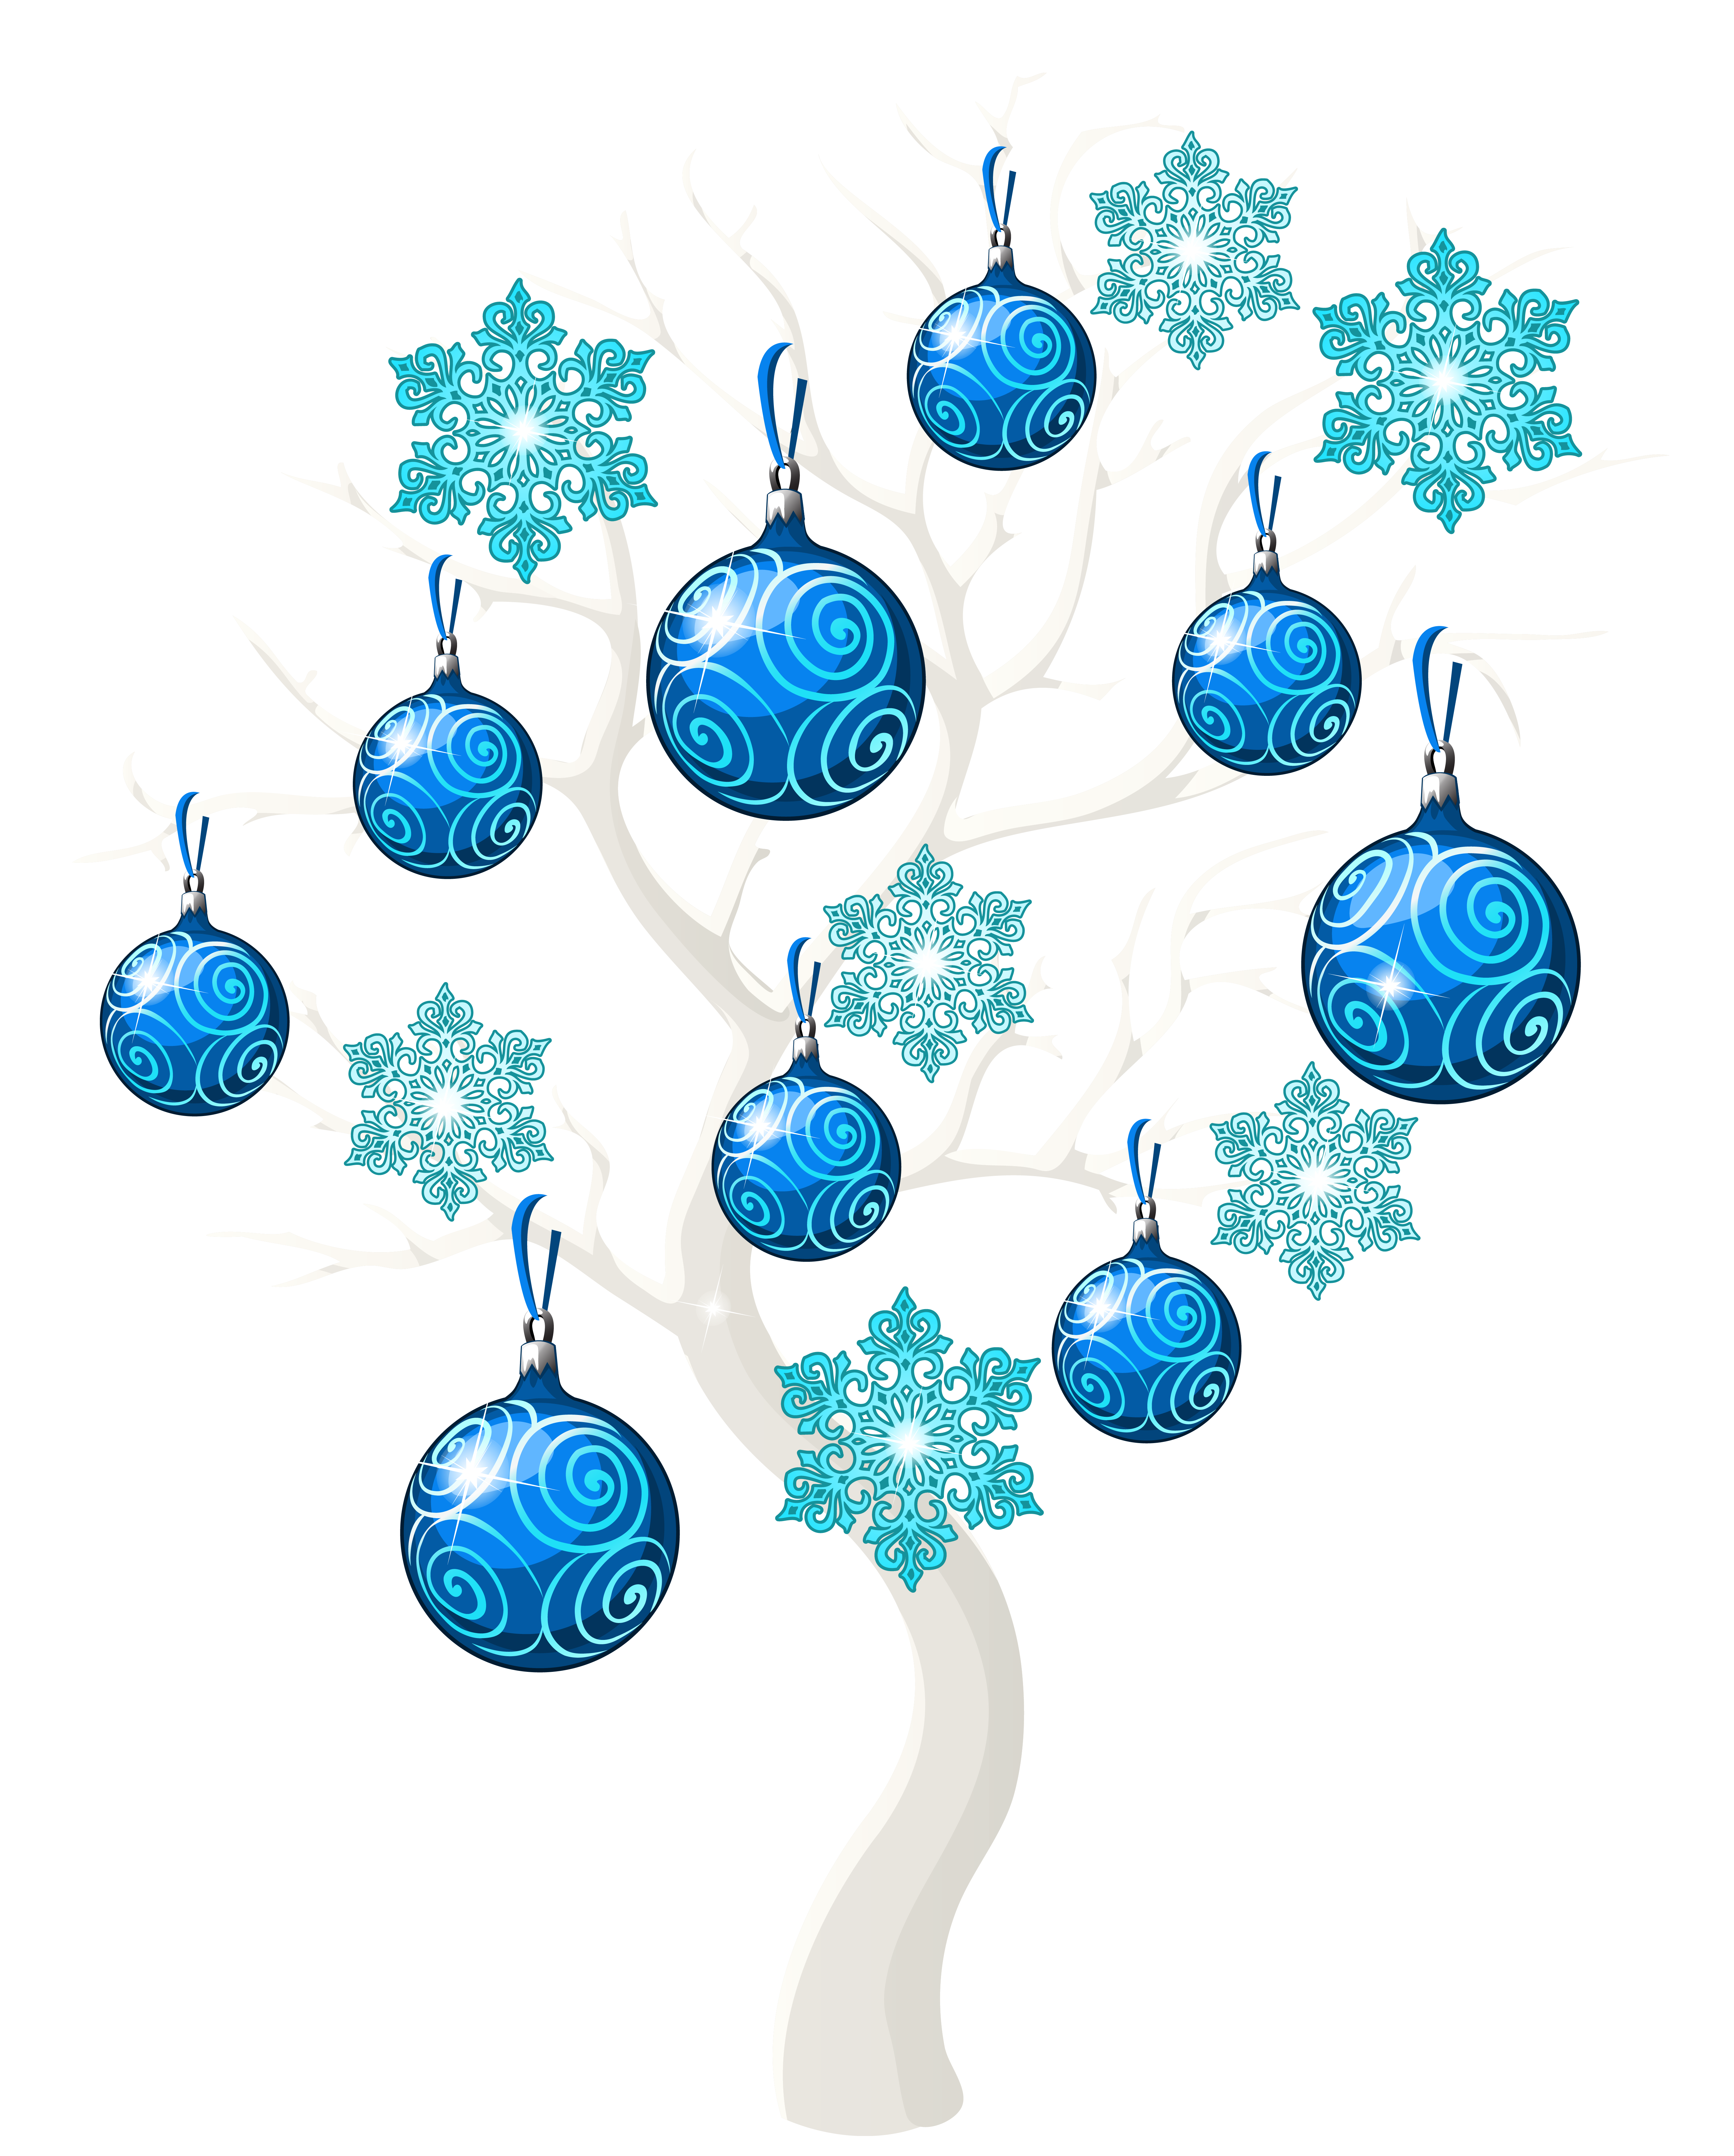 blue christmas tree png